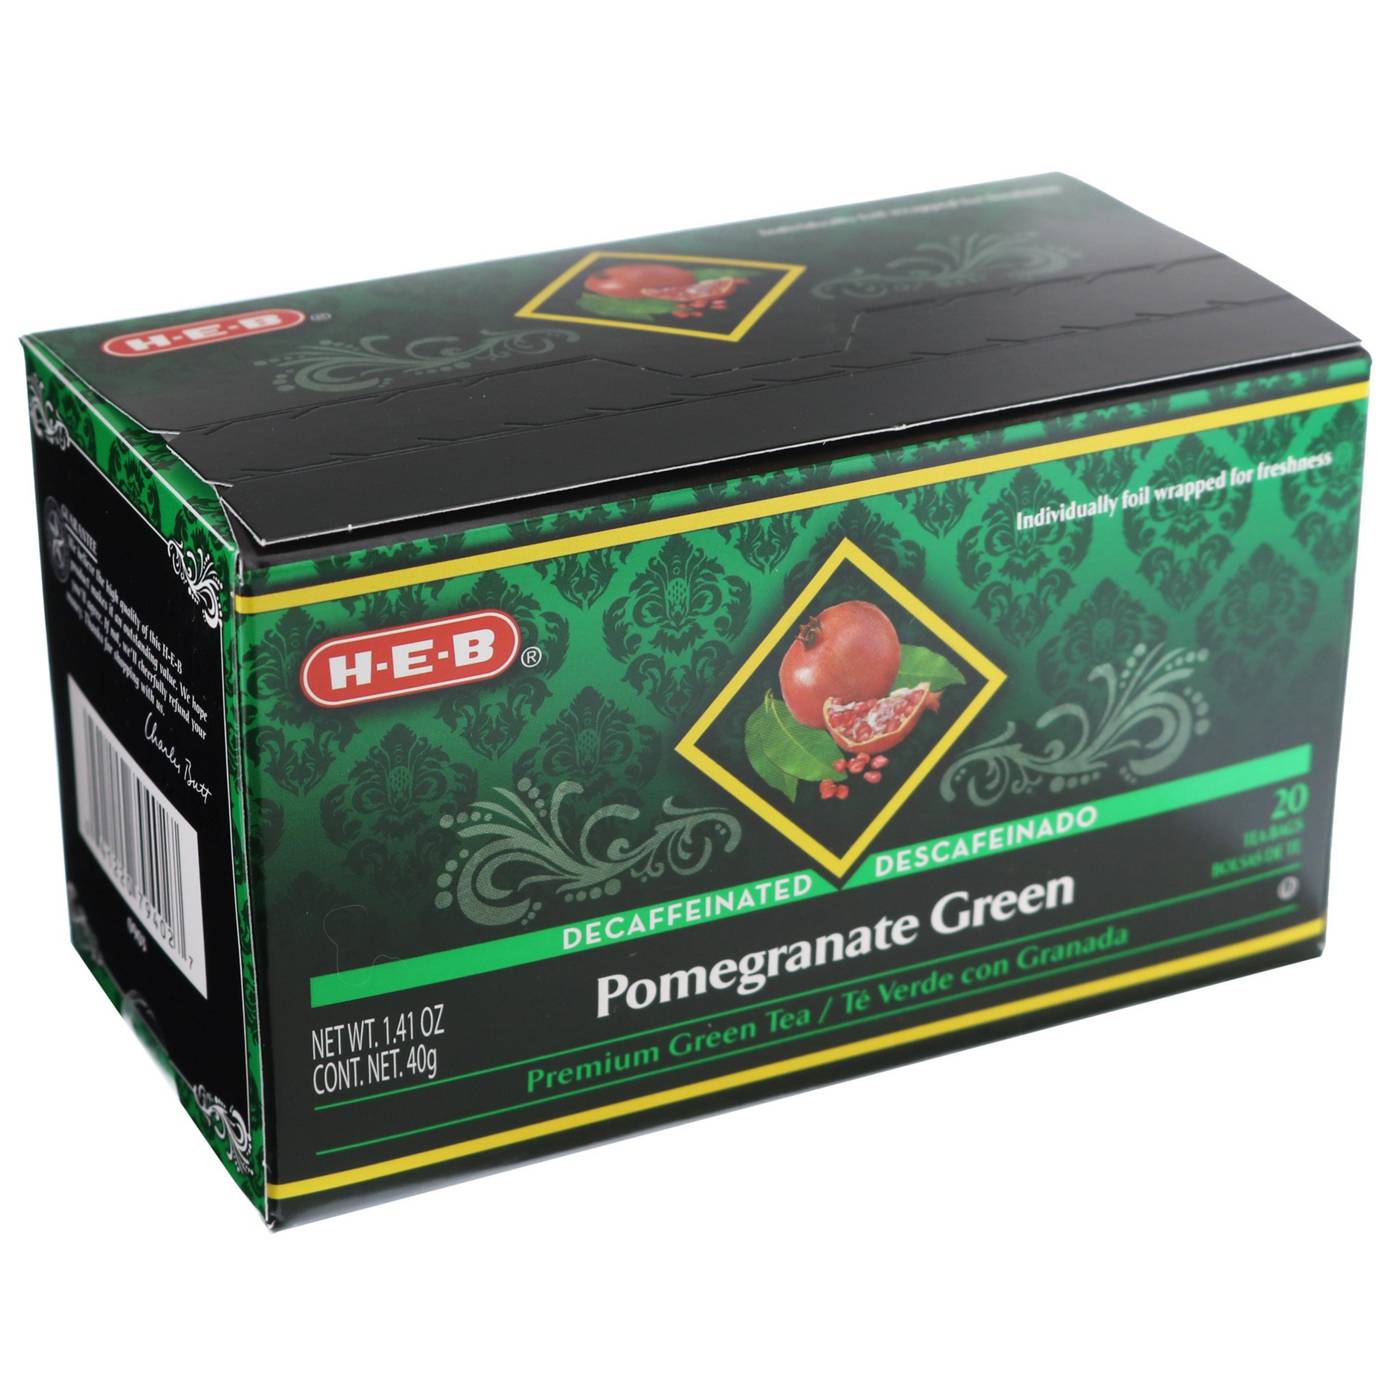 H-E-B Decaf Pomegranate Green Tea Bags; image 2 of 2